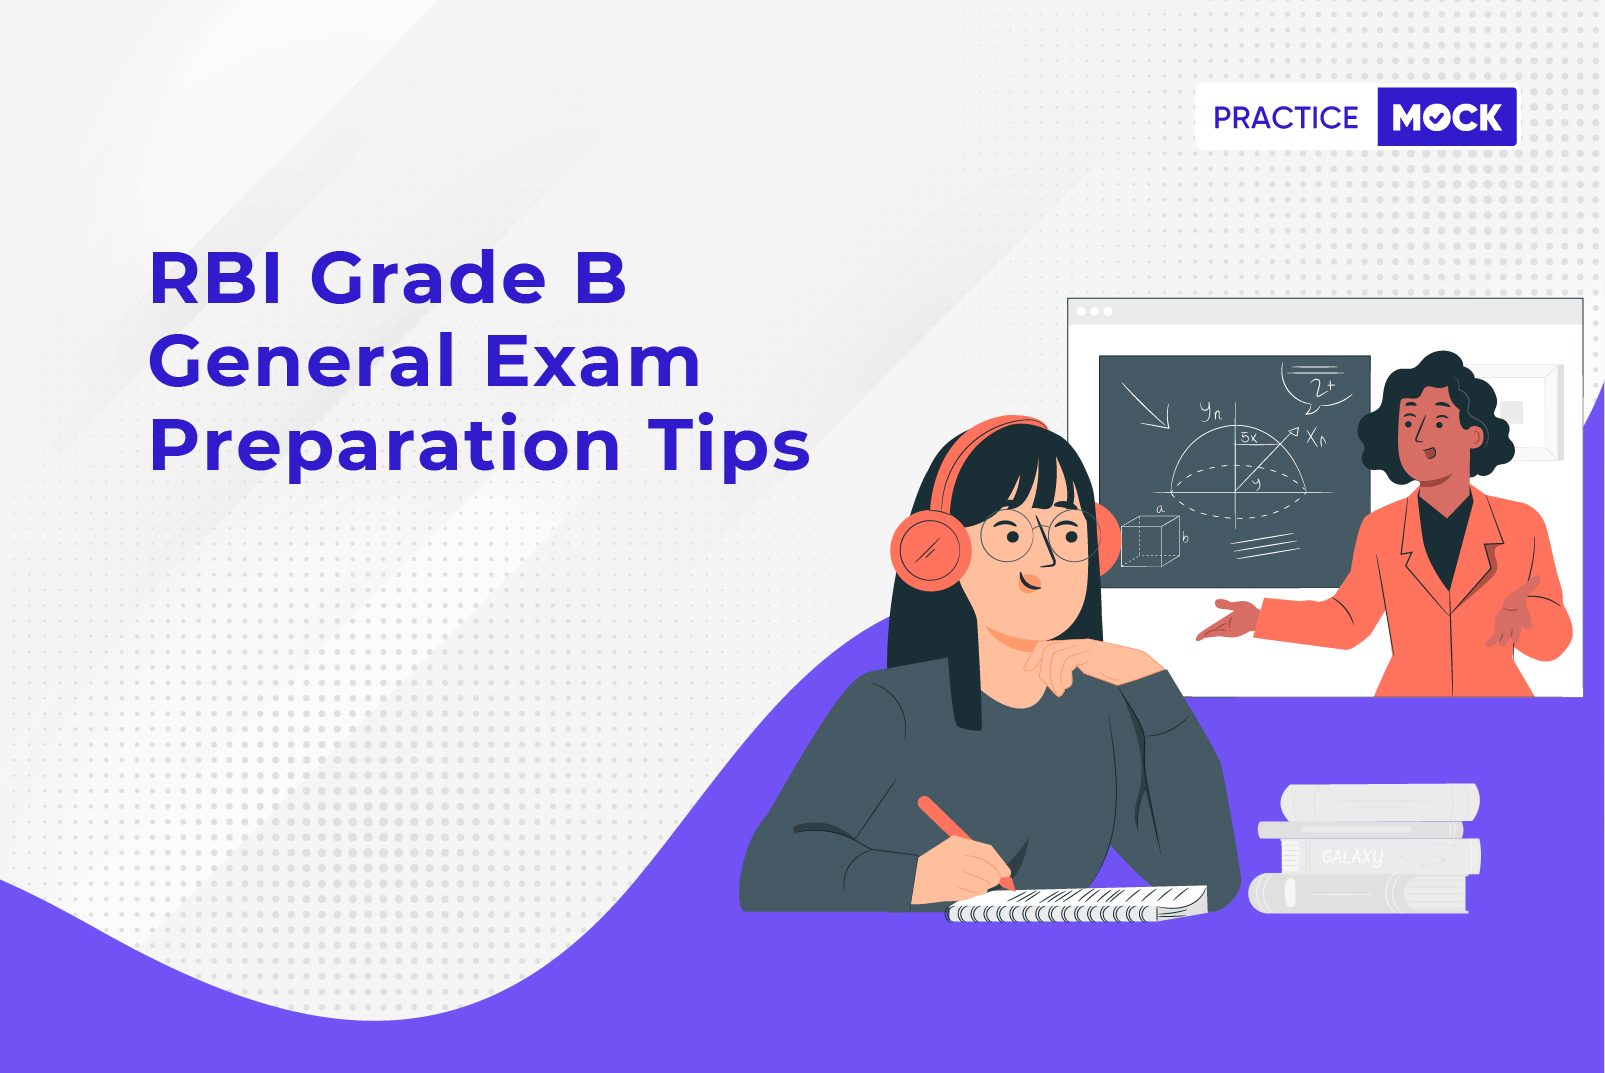 RBI Grade B Preparation Tips